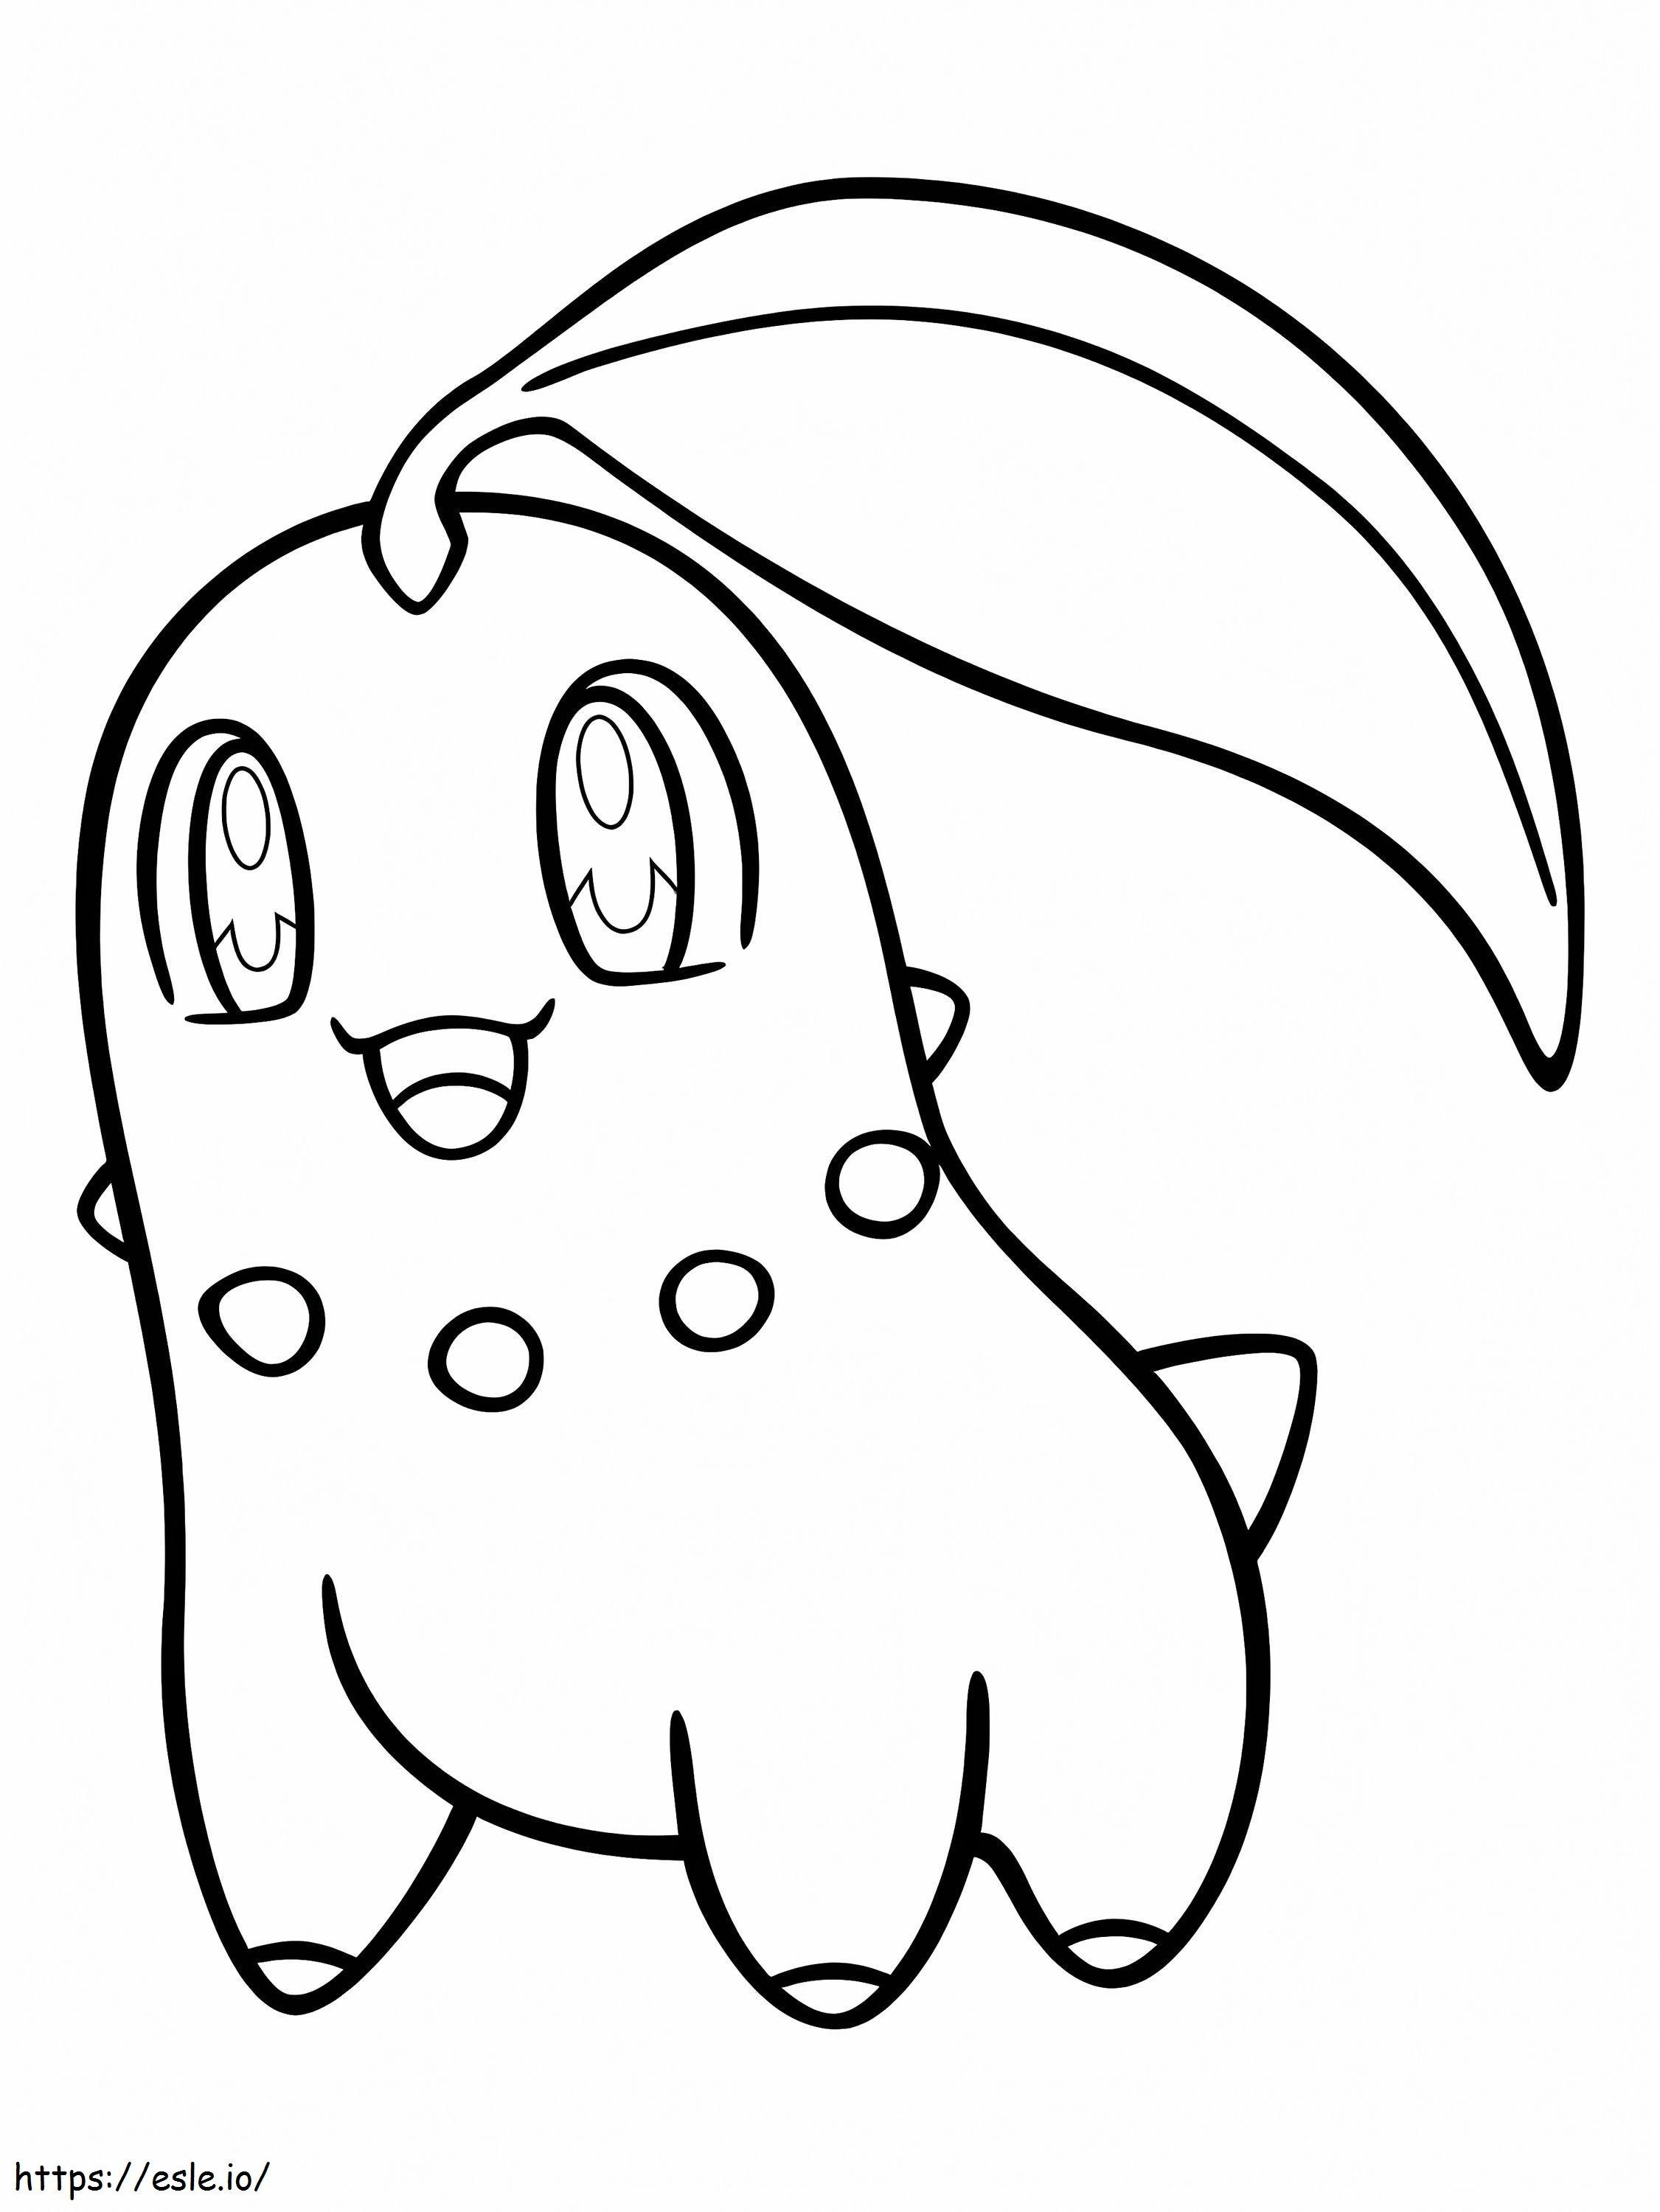 Adorable Chikorita Pokemon coloring page